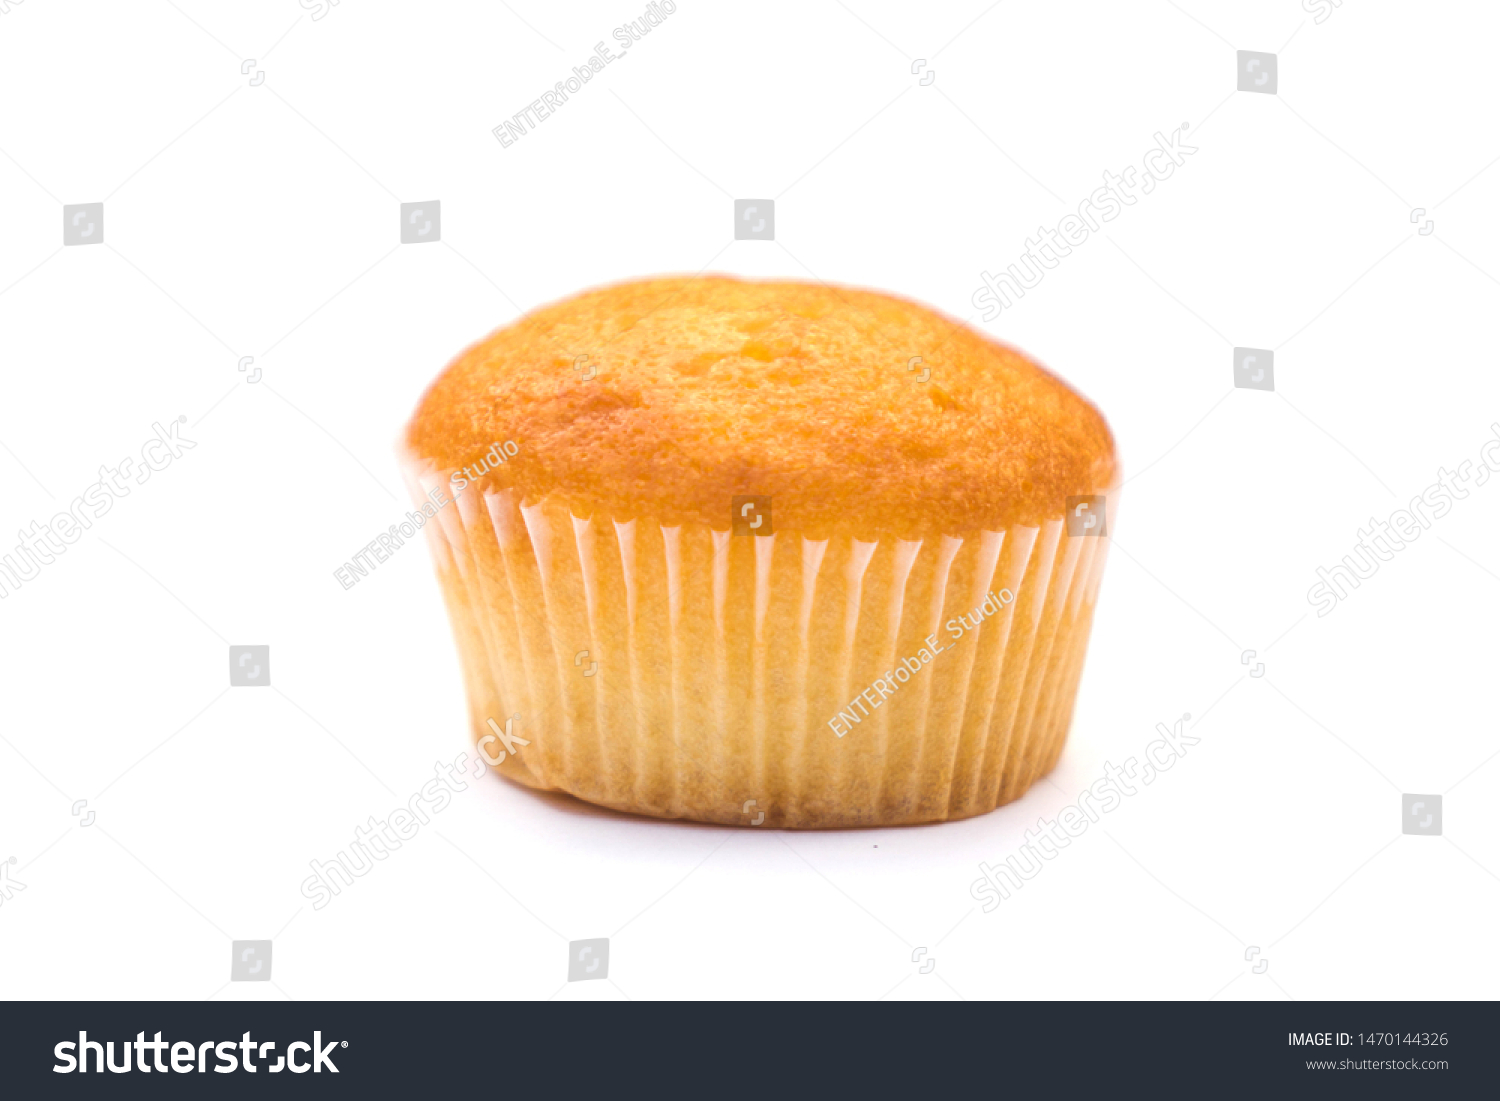 4,294 Plain cup cakes Images, Stock Photos & Vectors | Shutterstock